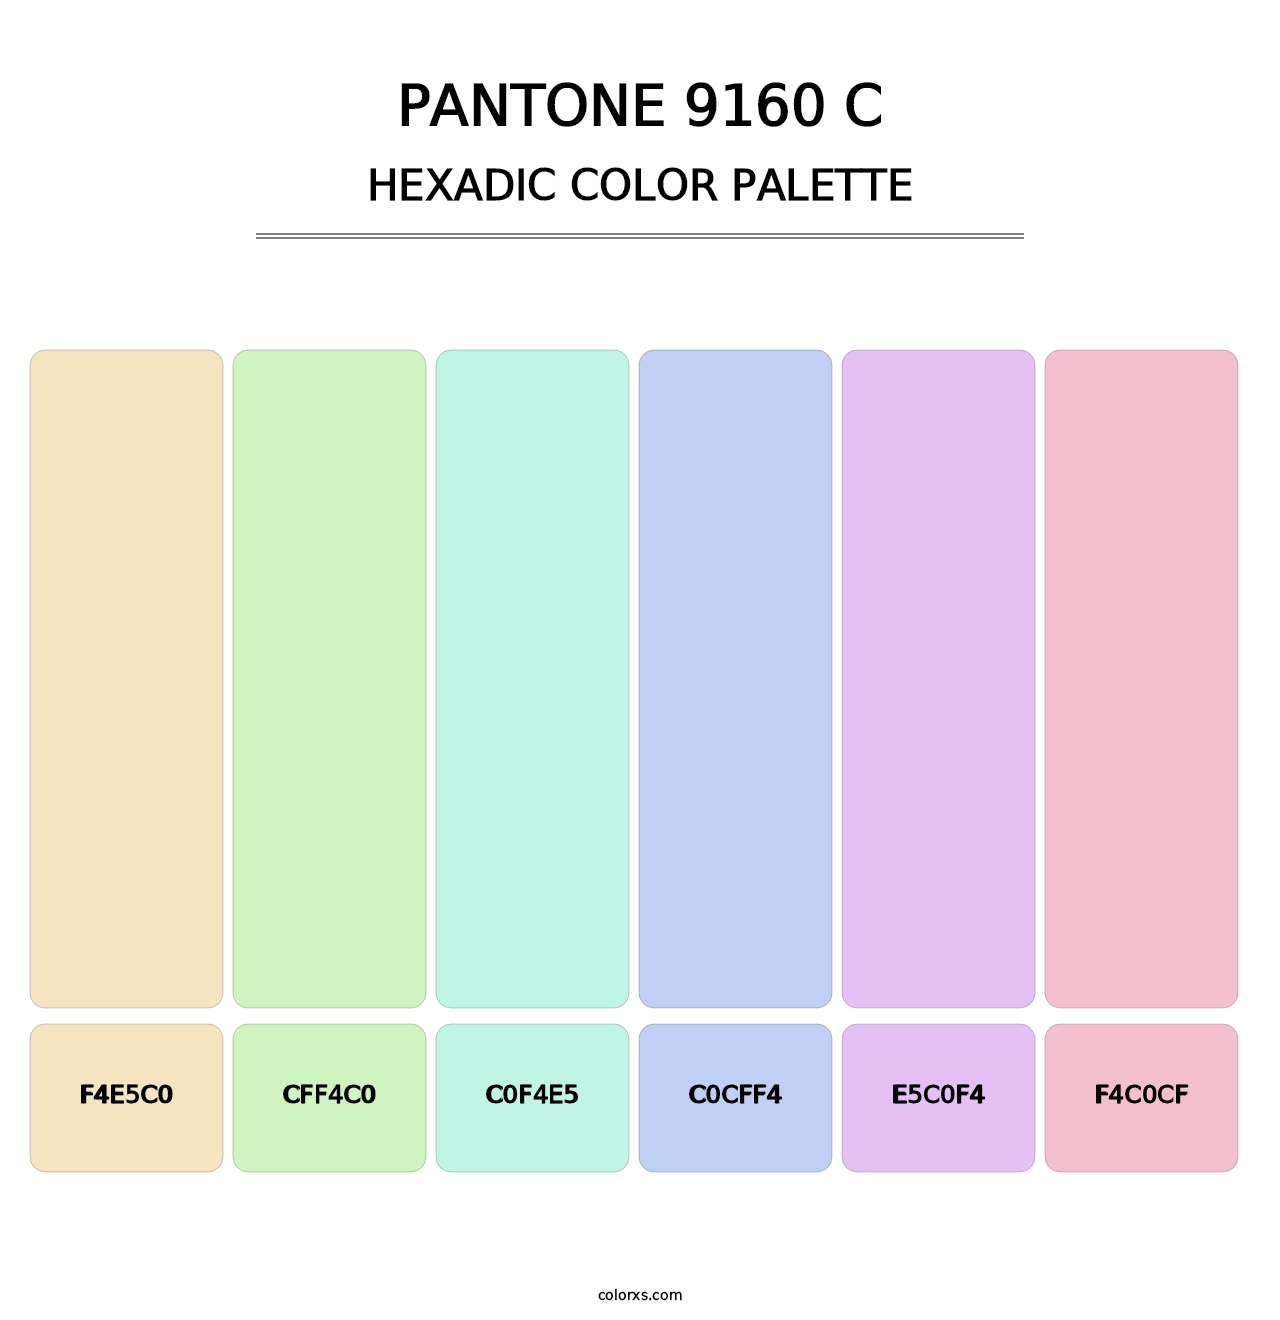 PANTONE 9160 C - Hexadic Color Palette